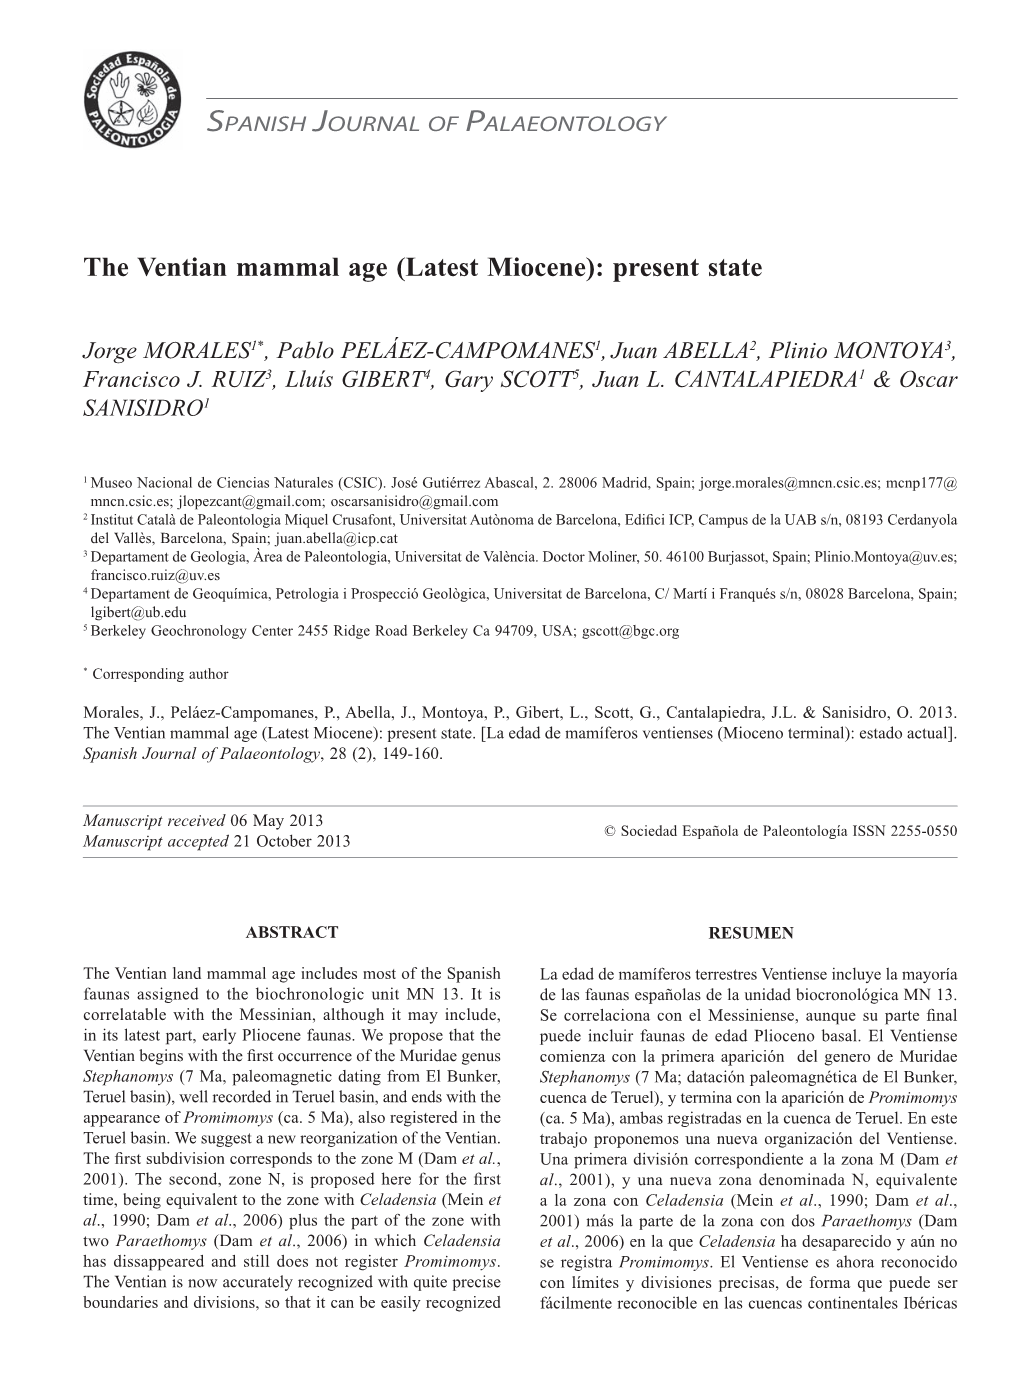 The Ventian Mammal Age (Latest Miocene): Present State